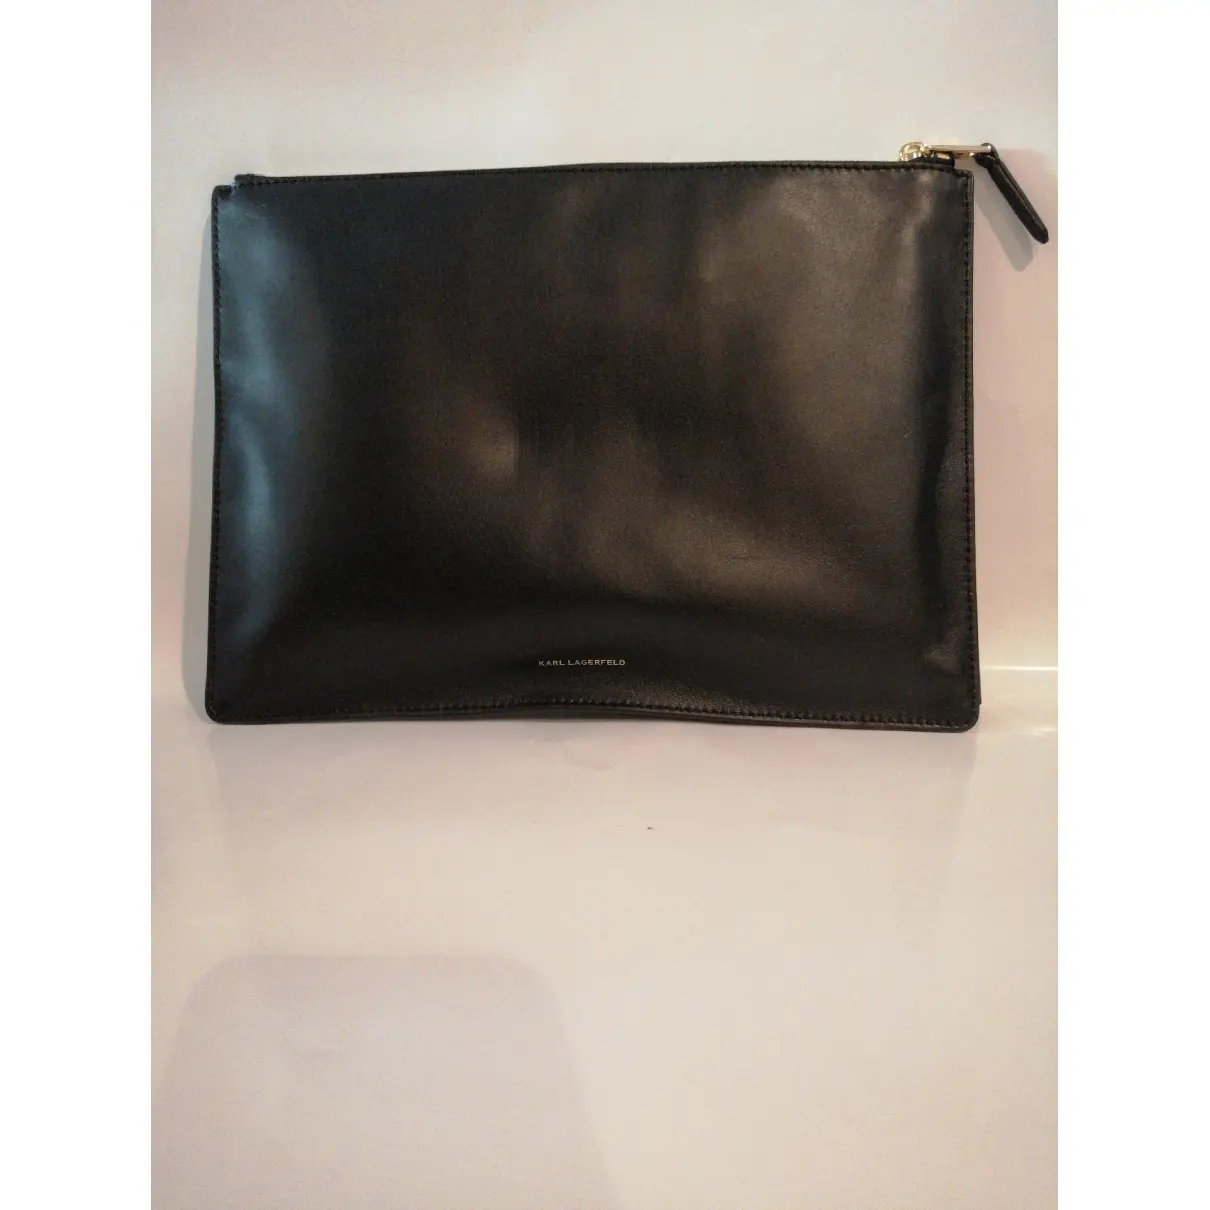 Buy Karl Lagerfeld Leather clutch bag online